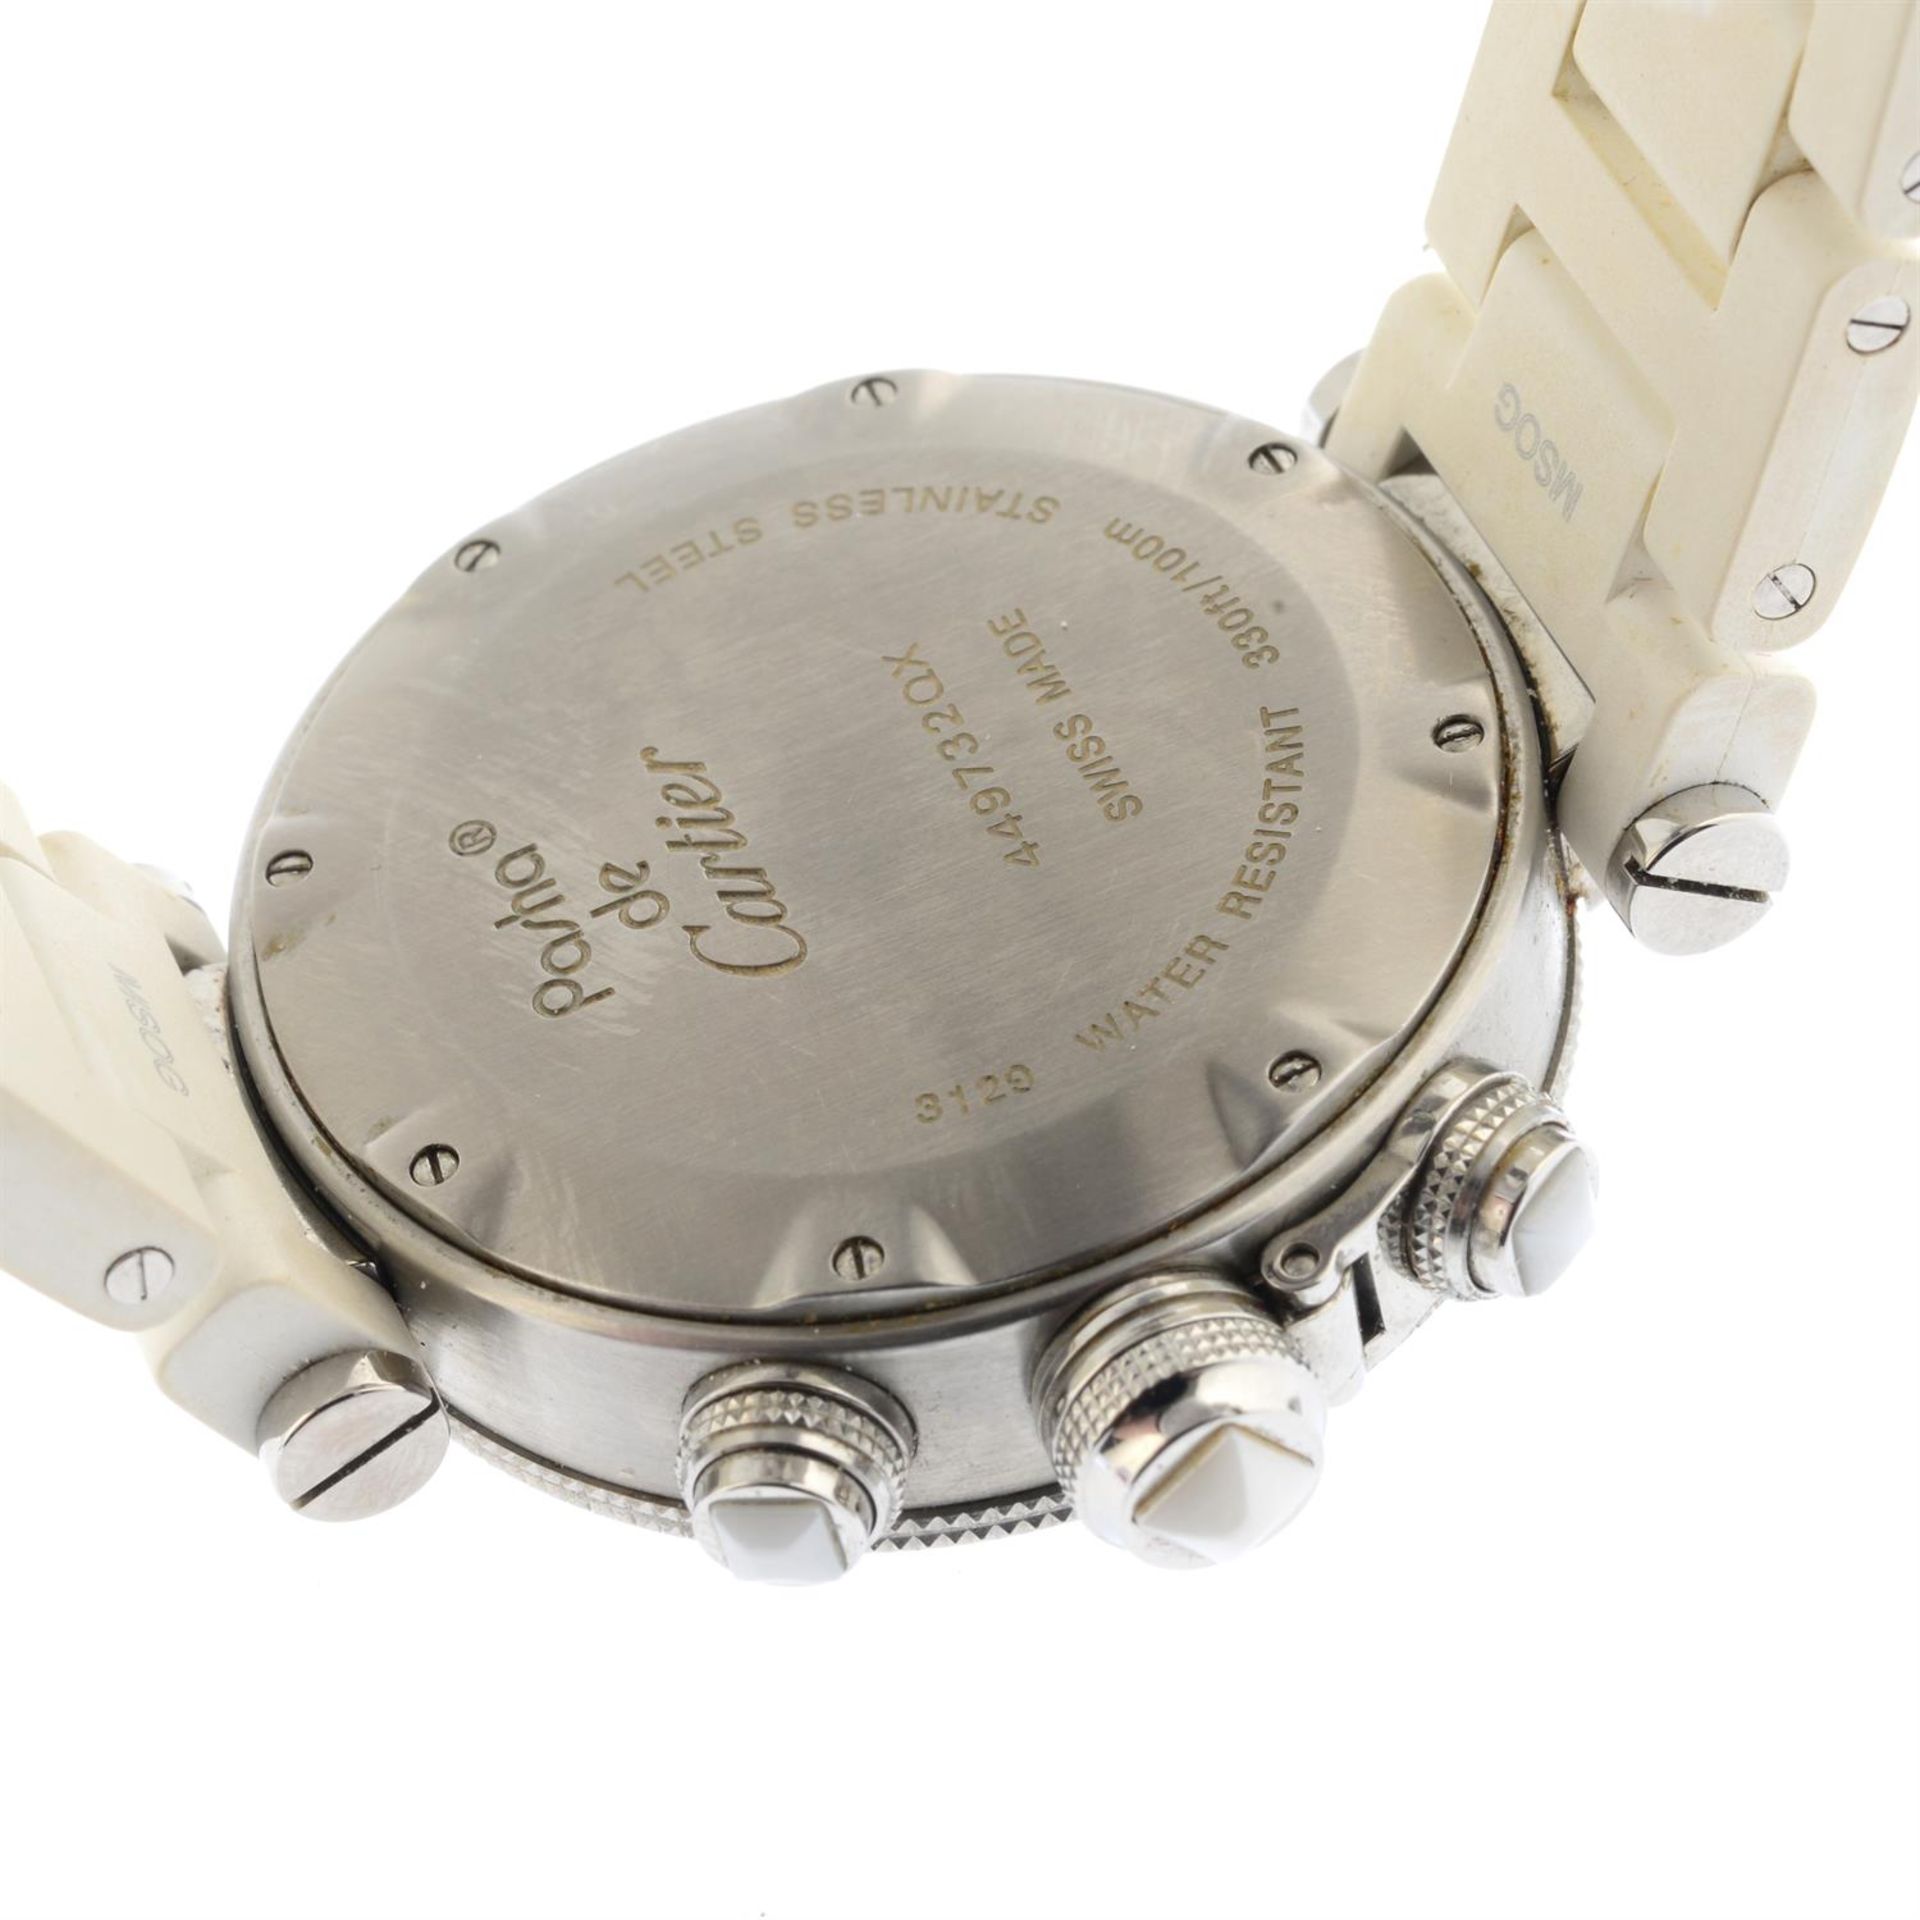 CARTIER - a bi-material Pasha chronograph bracelet watch, 37mm. - Image 2 of 6